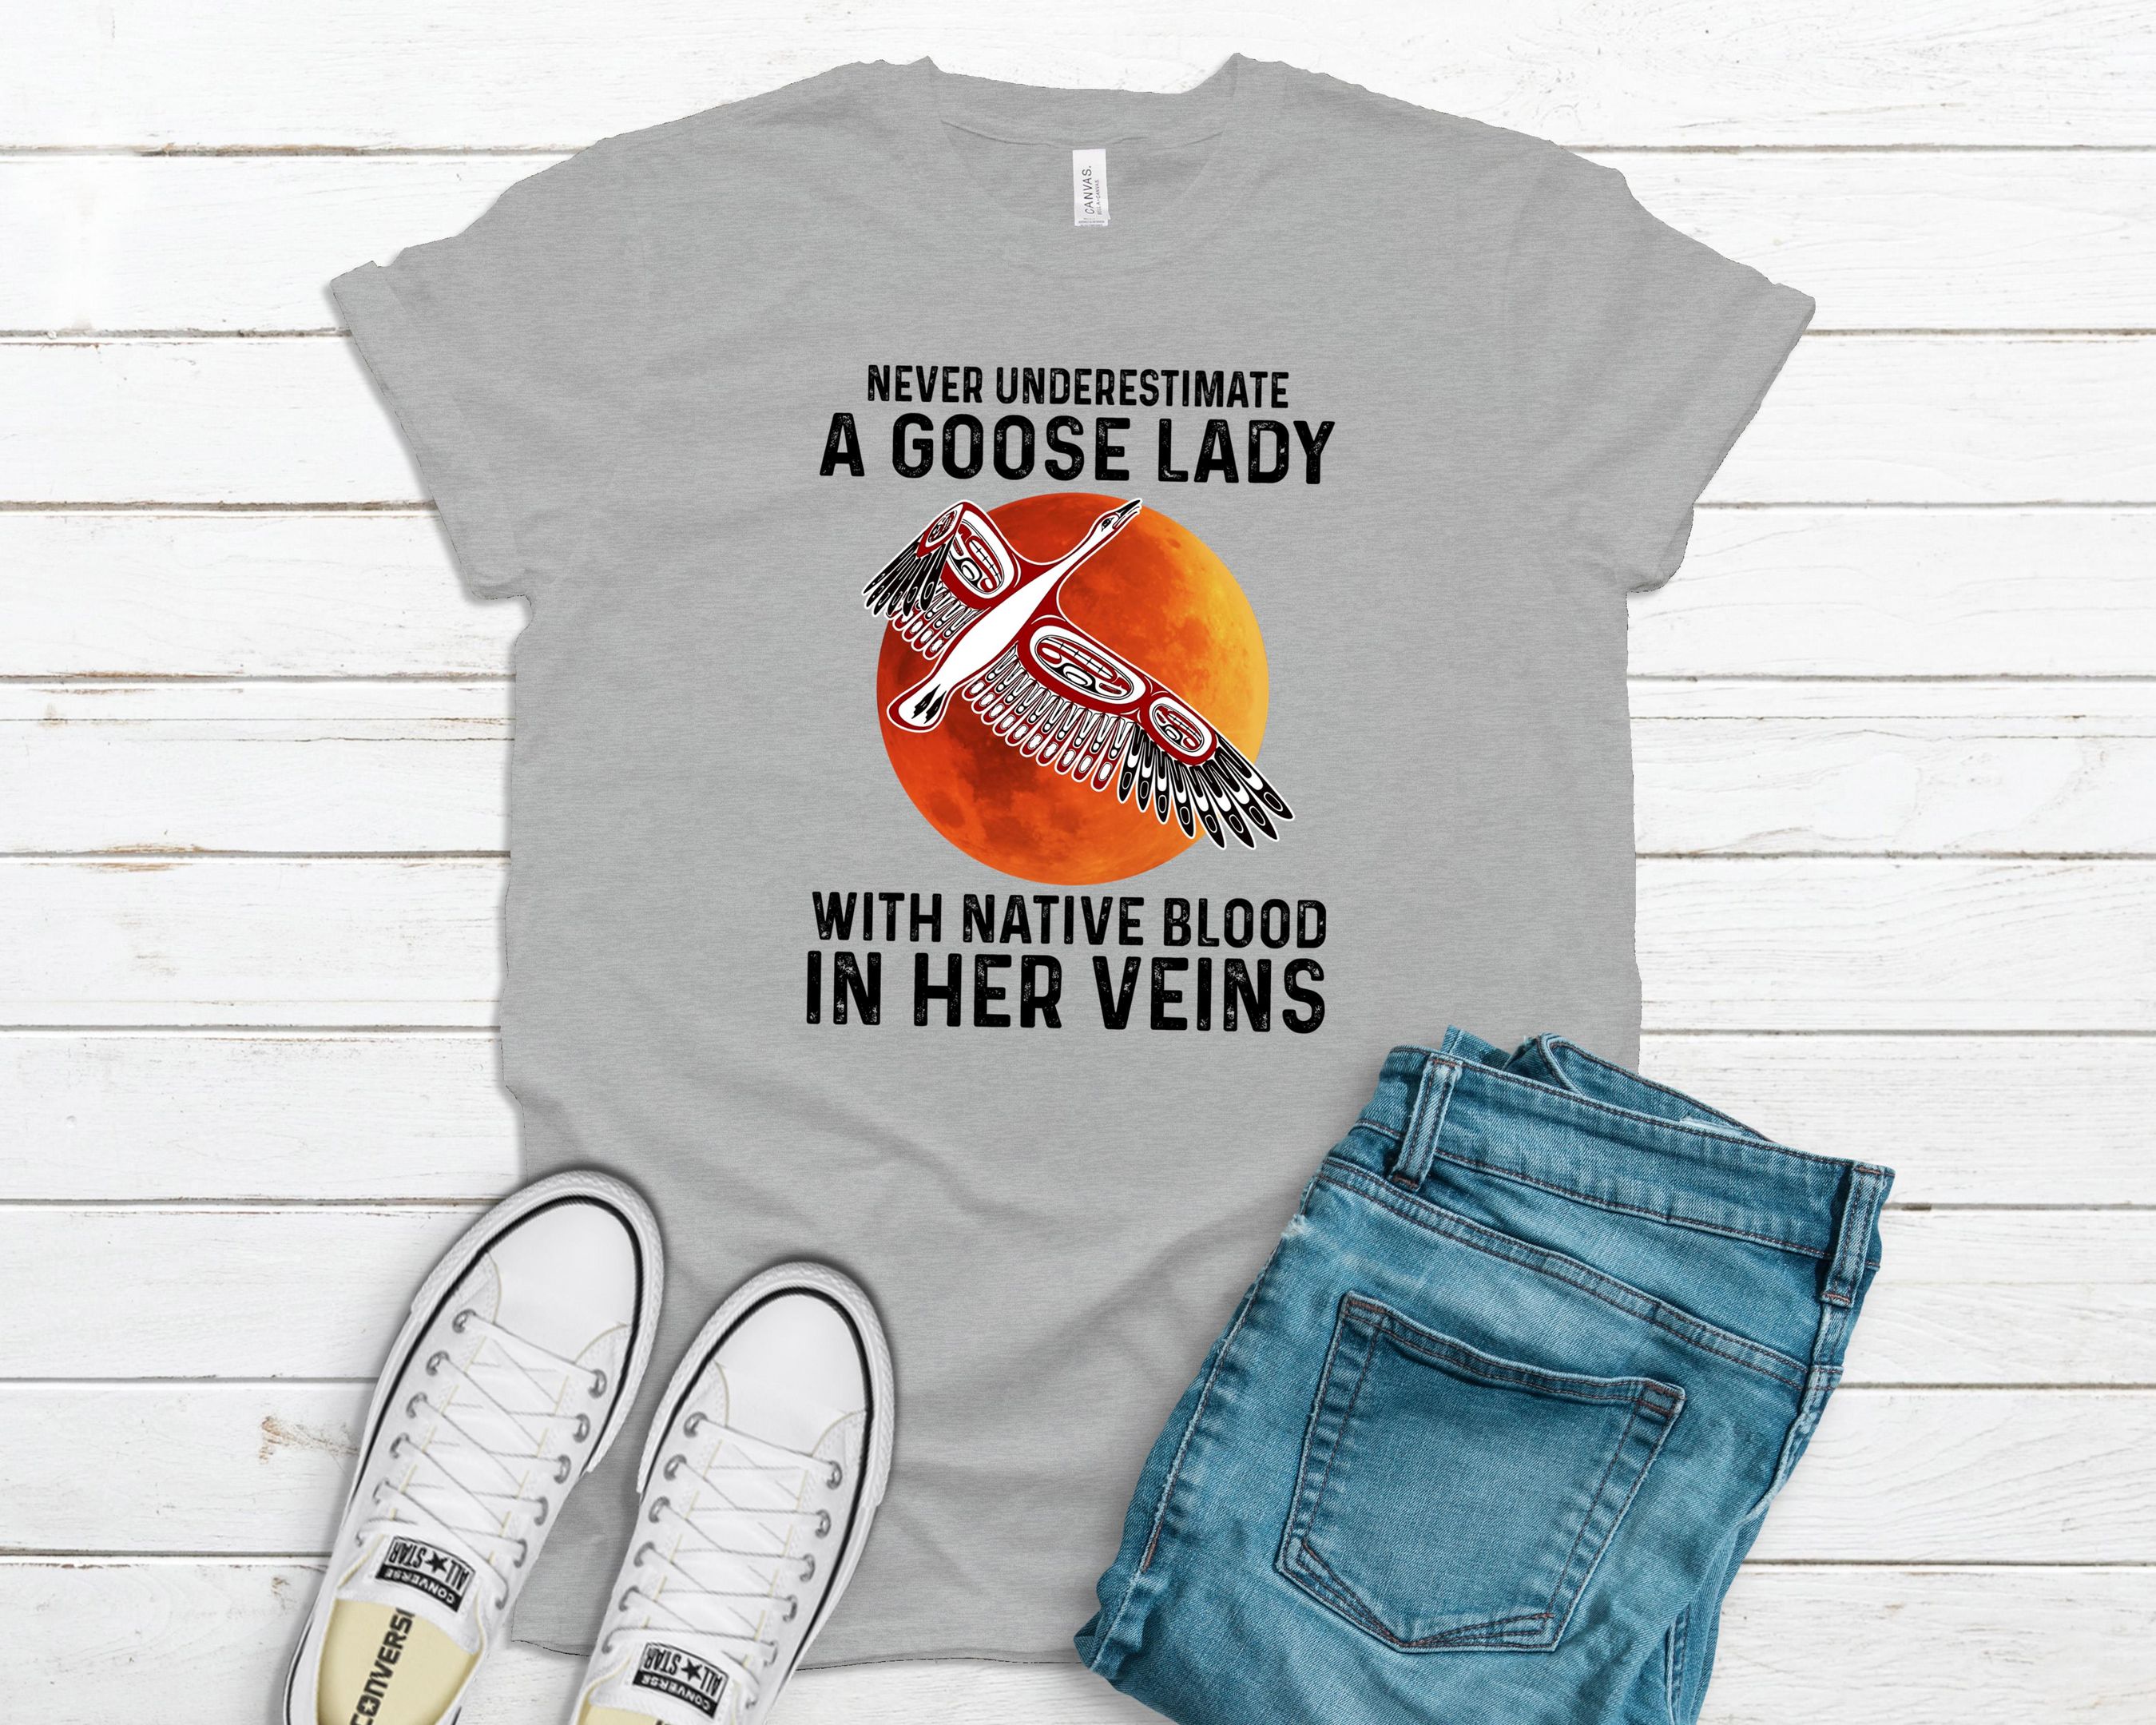 A Goose Lady Shirt, Native Blood Shirt, Native American Zodiac Sign Shirt